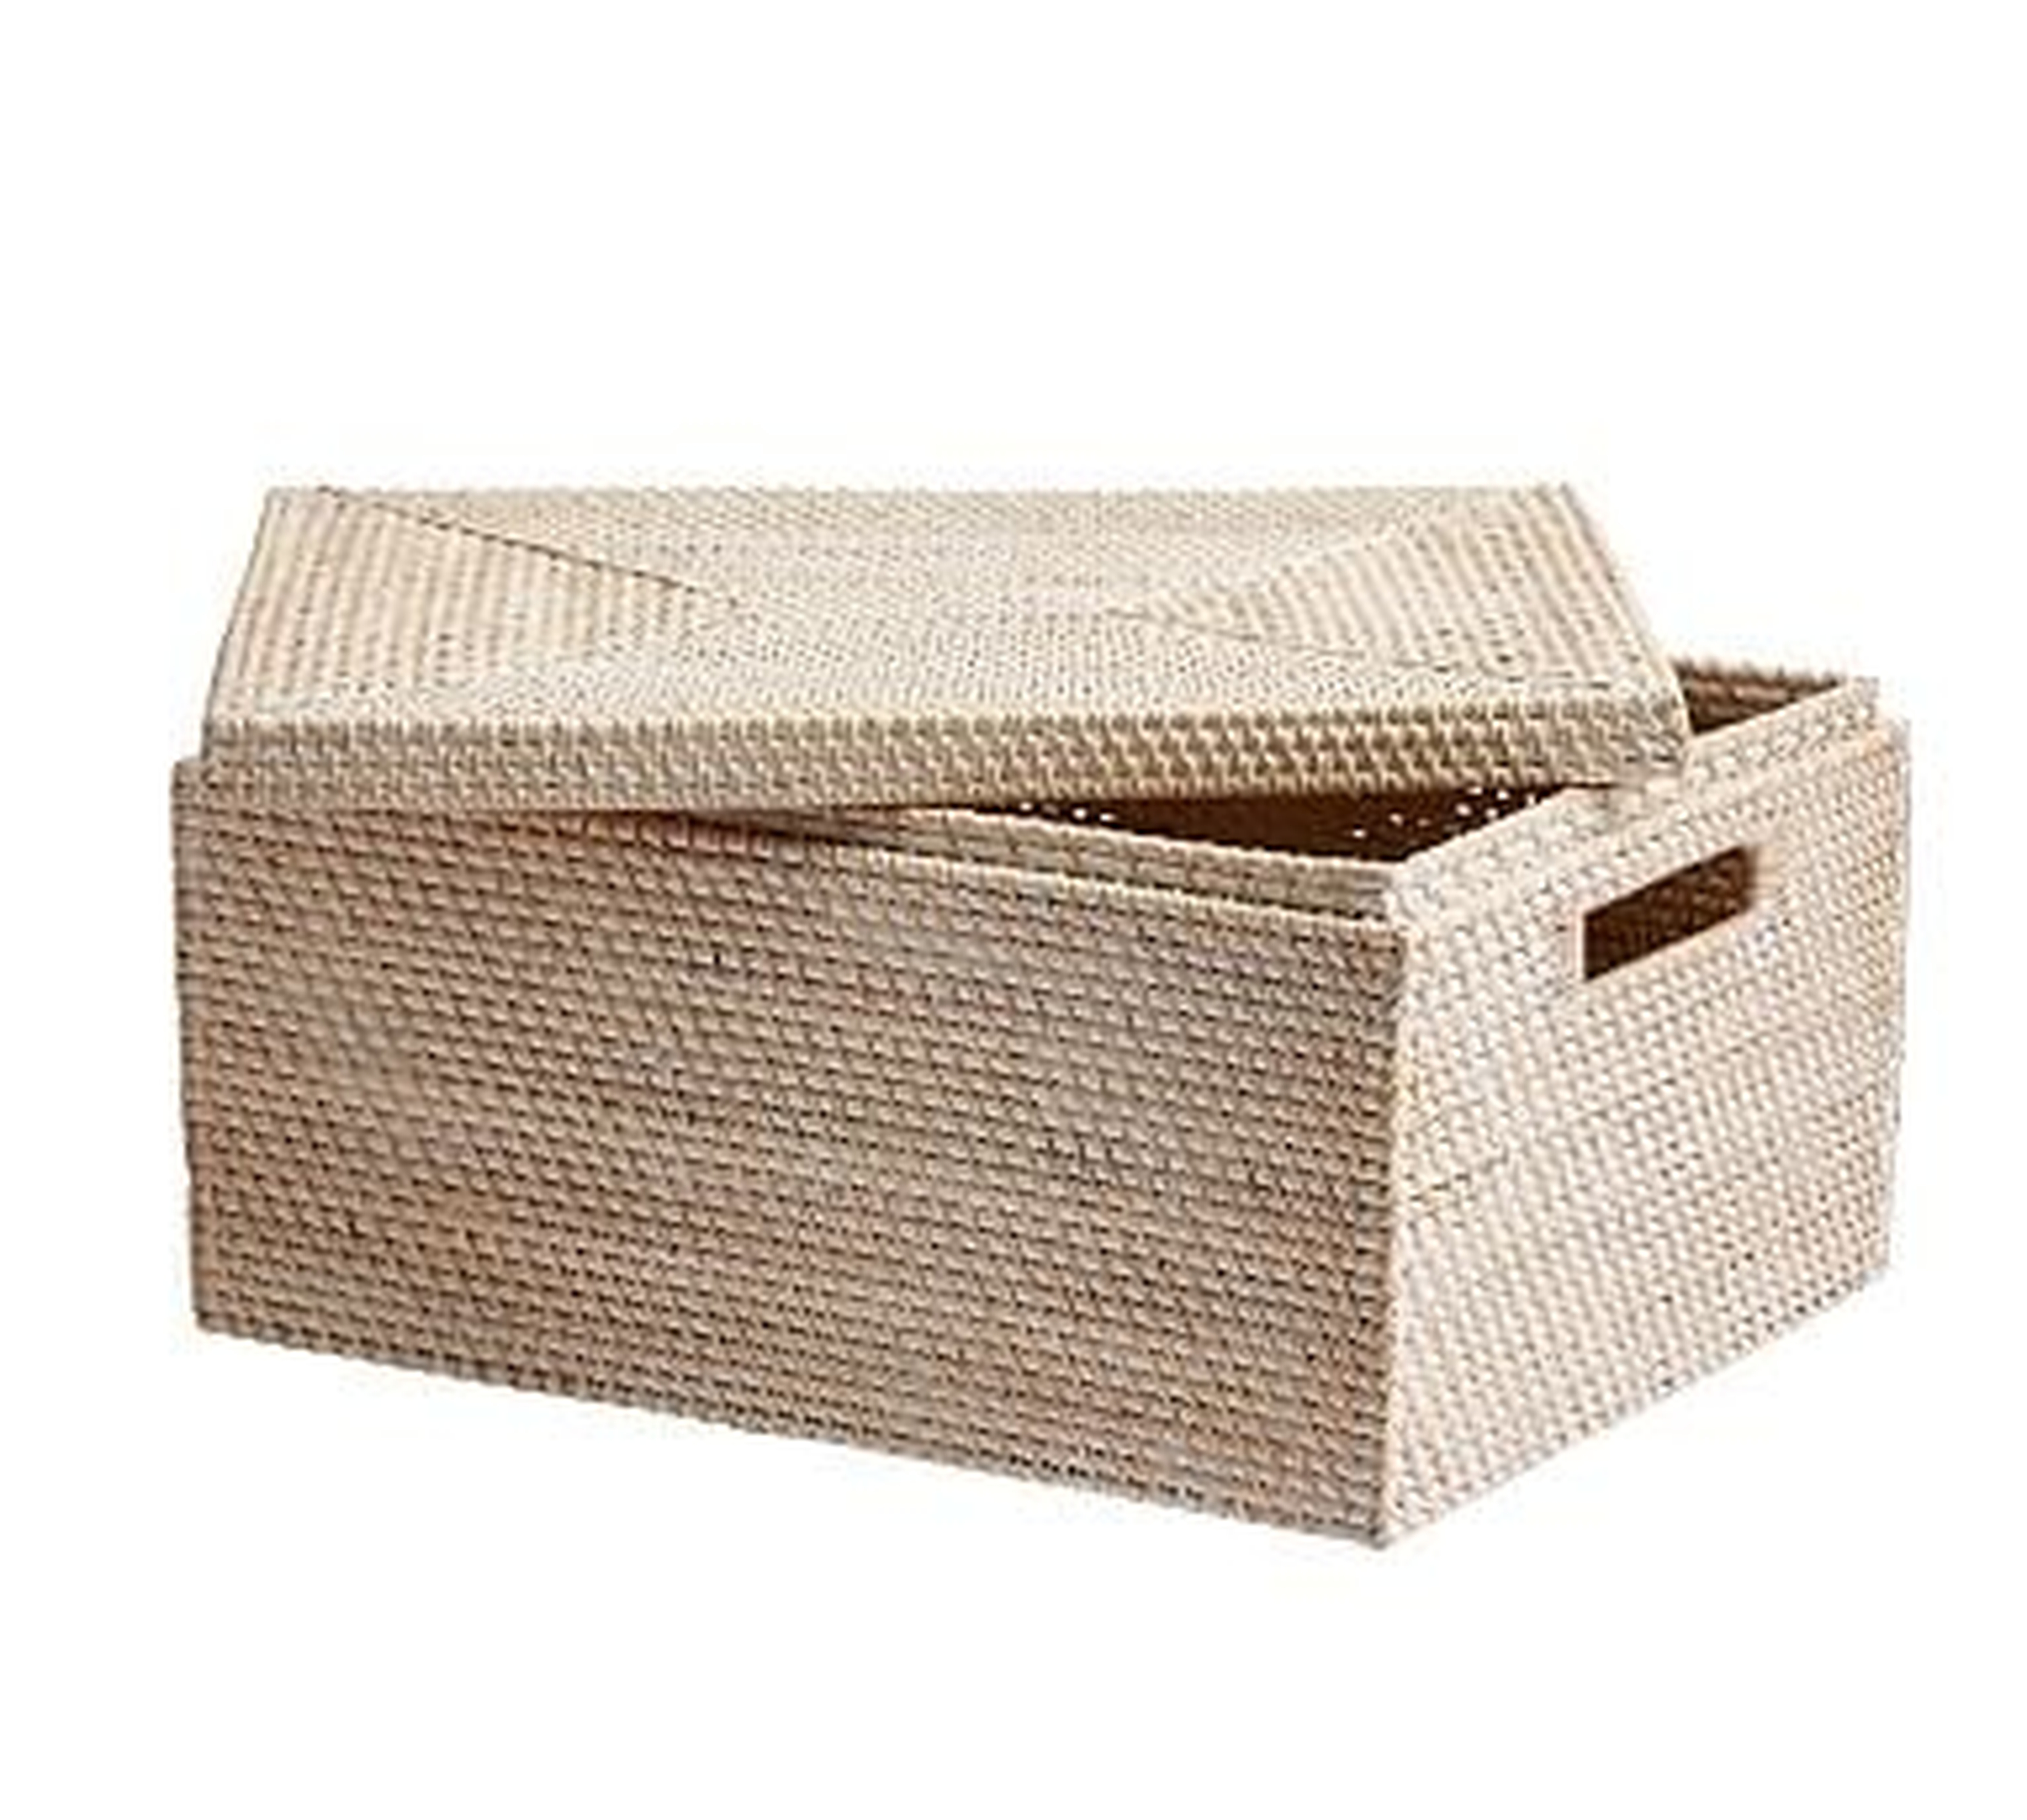 Tava Woven Lidded Basket, Medium, Whitewash - Pottery Barn